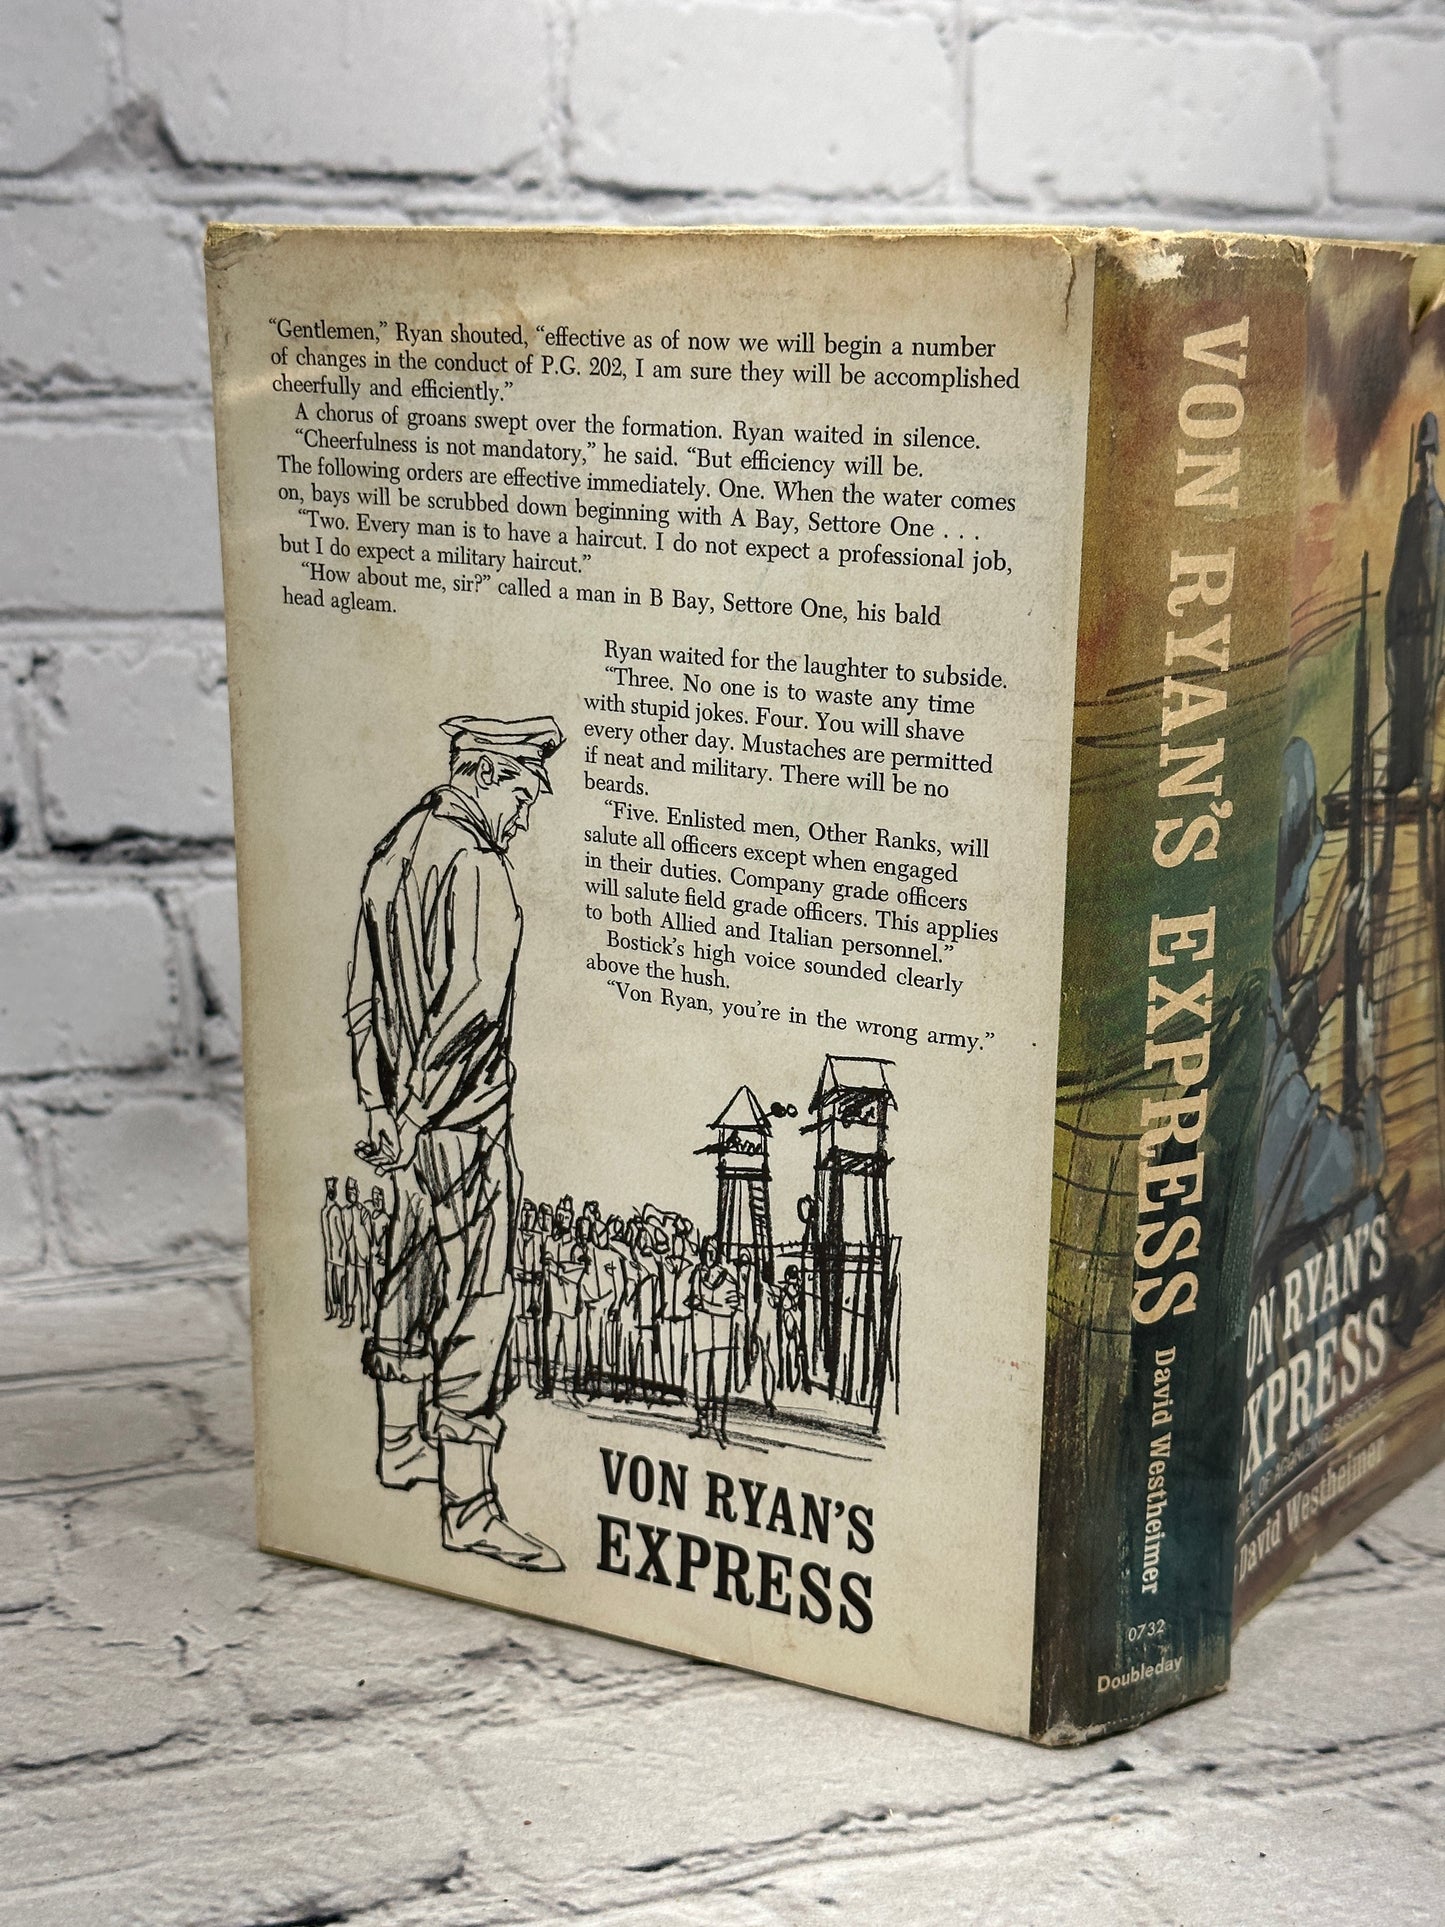 Von Ryan's Express: A Novel of Agonizing..by David Westheimer [1964 · BCE]